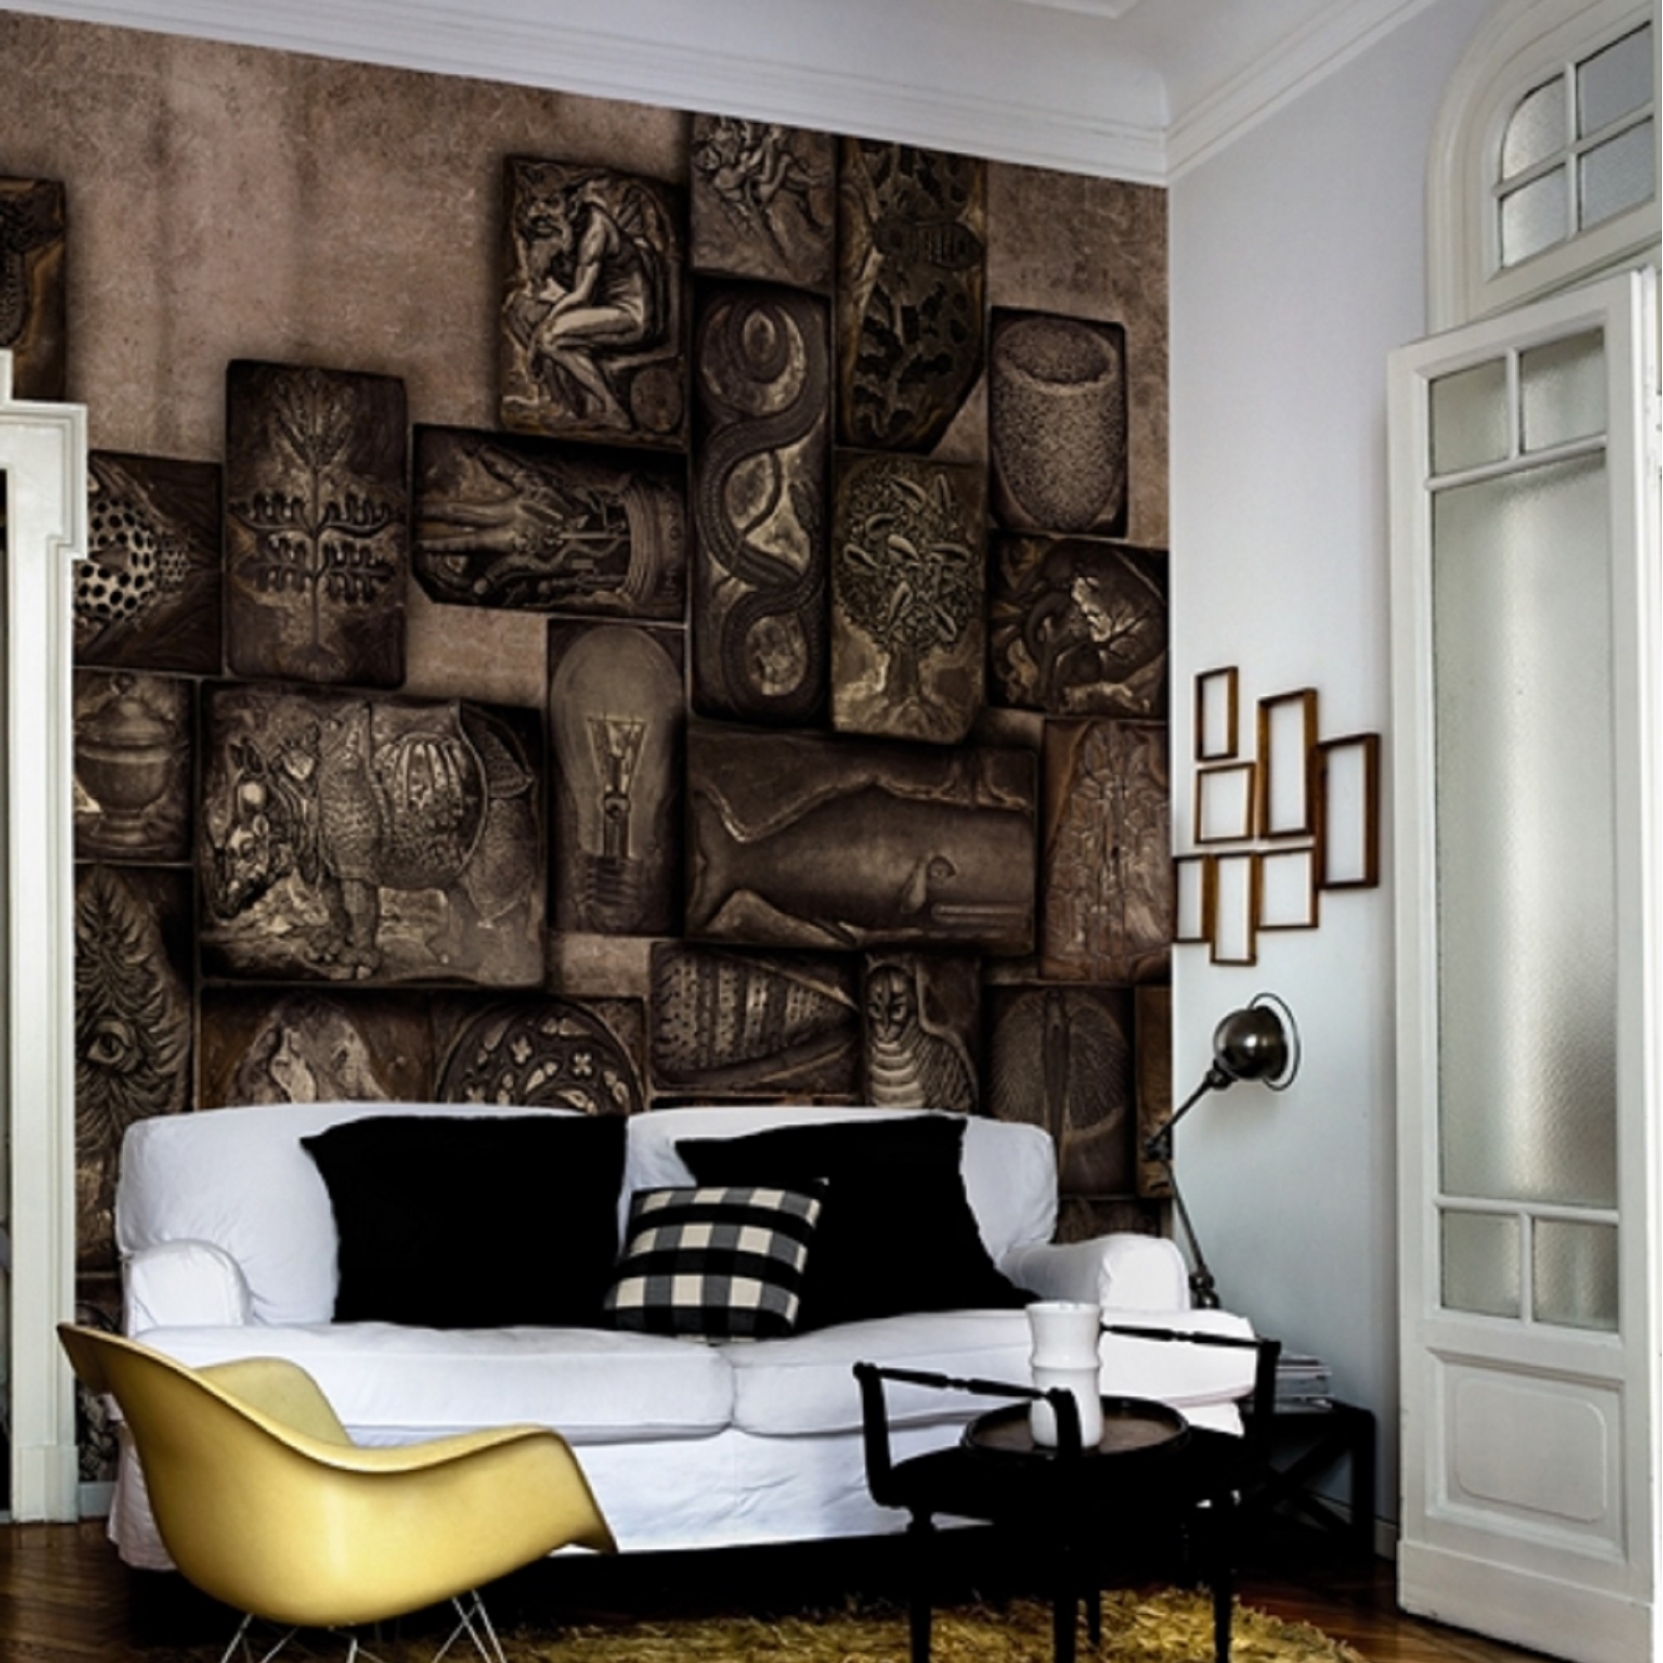 relief wallpaper,living room,room,wall,interior design,furniture